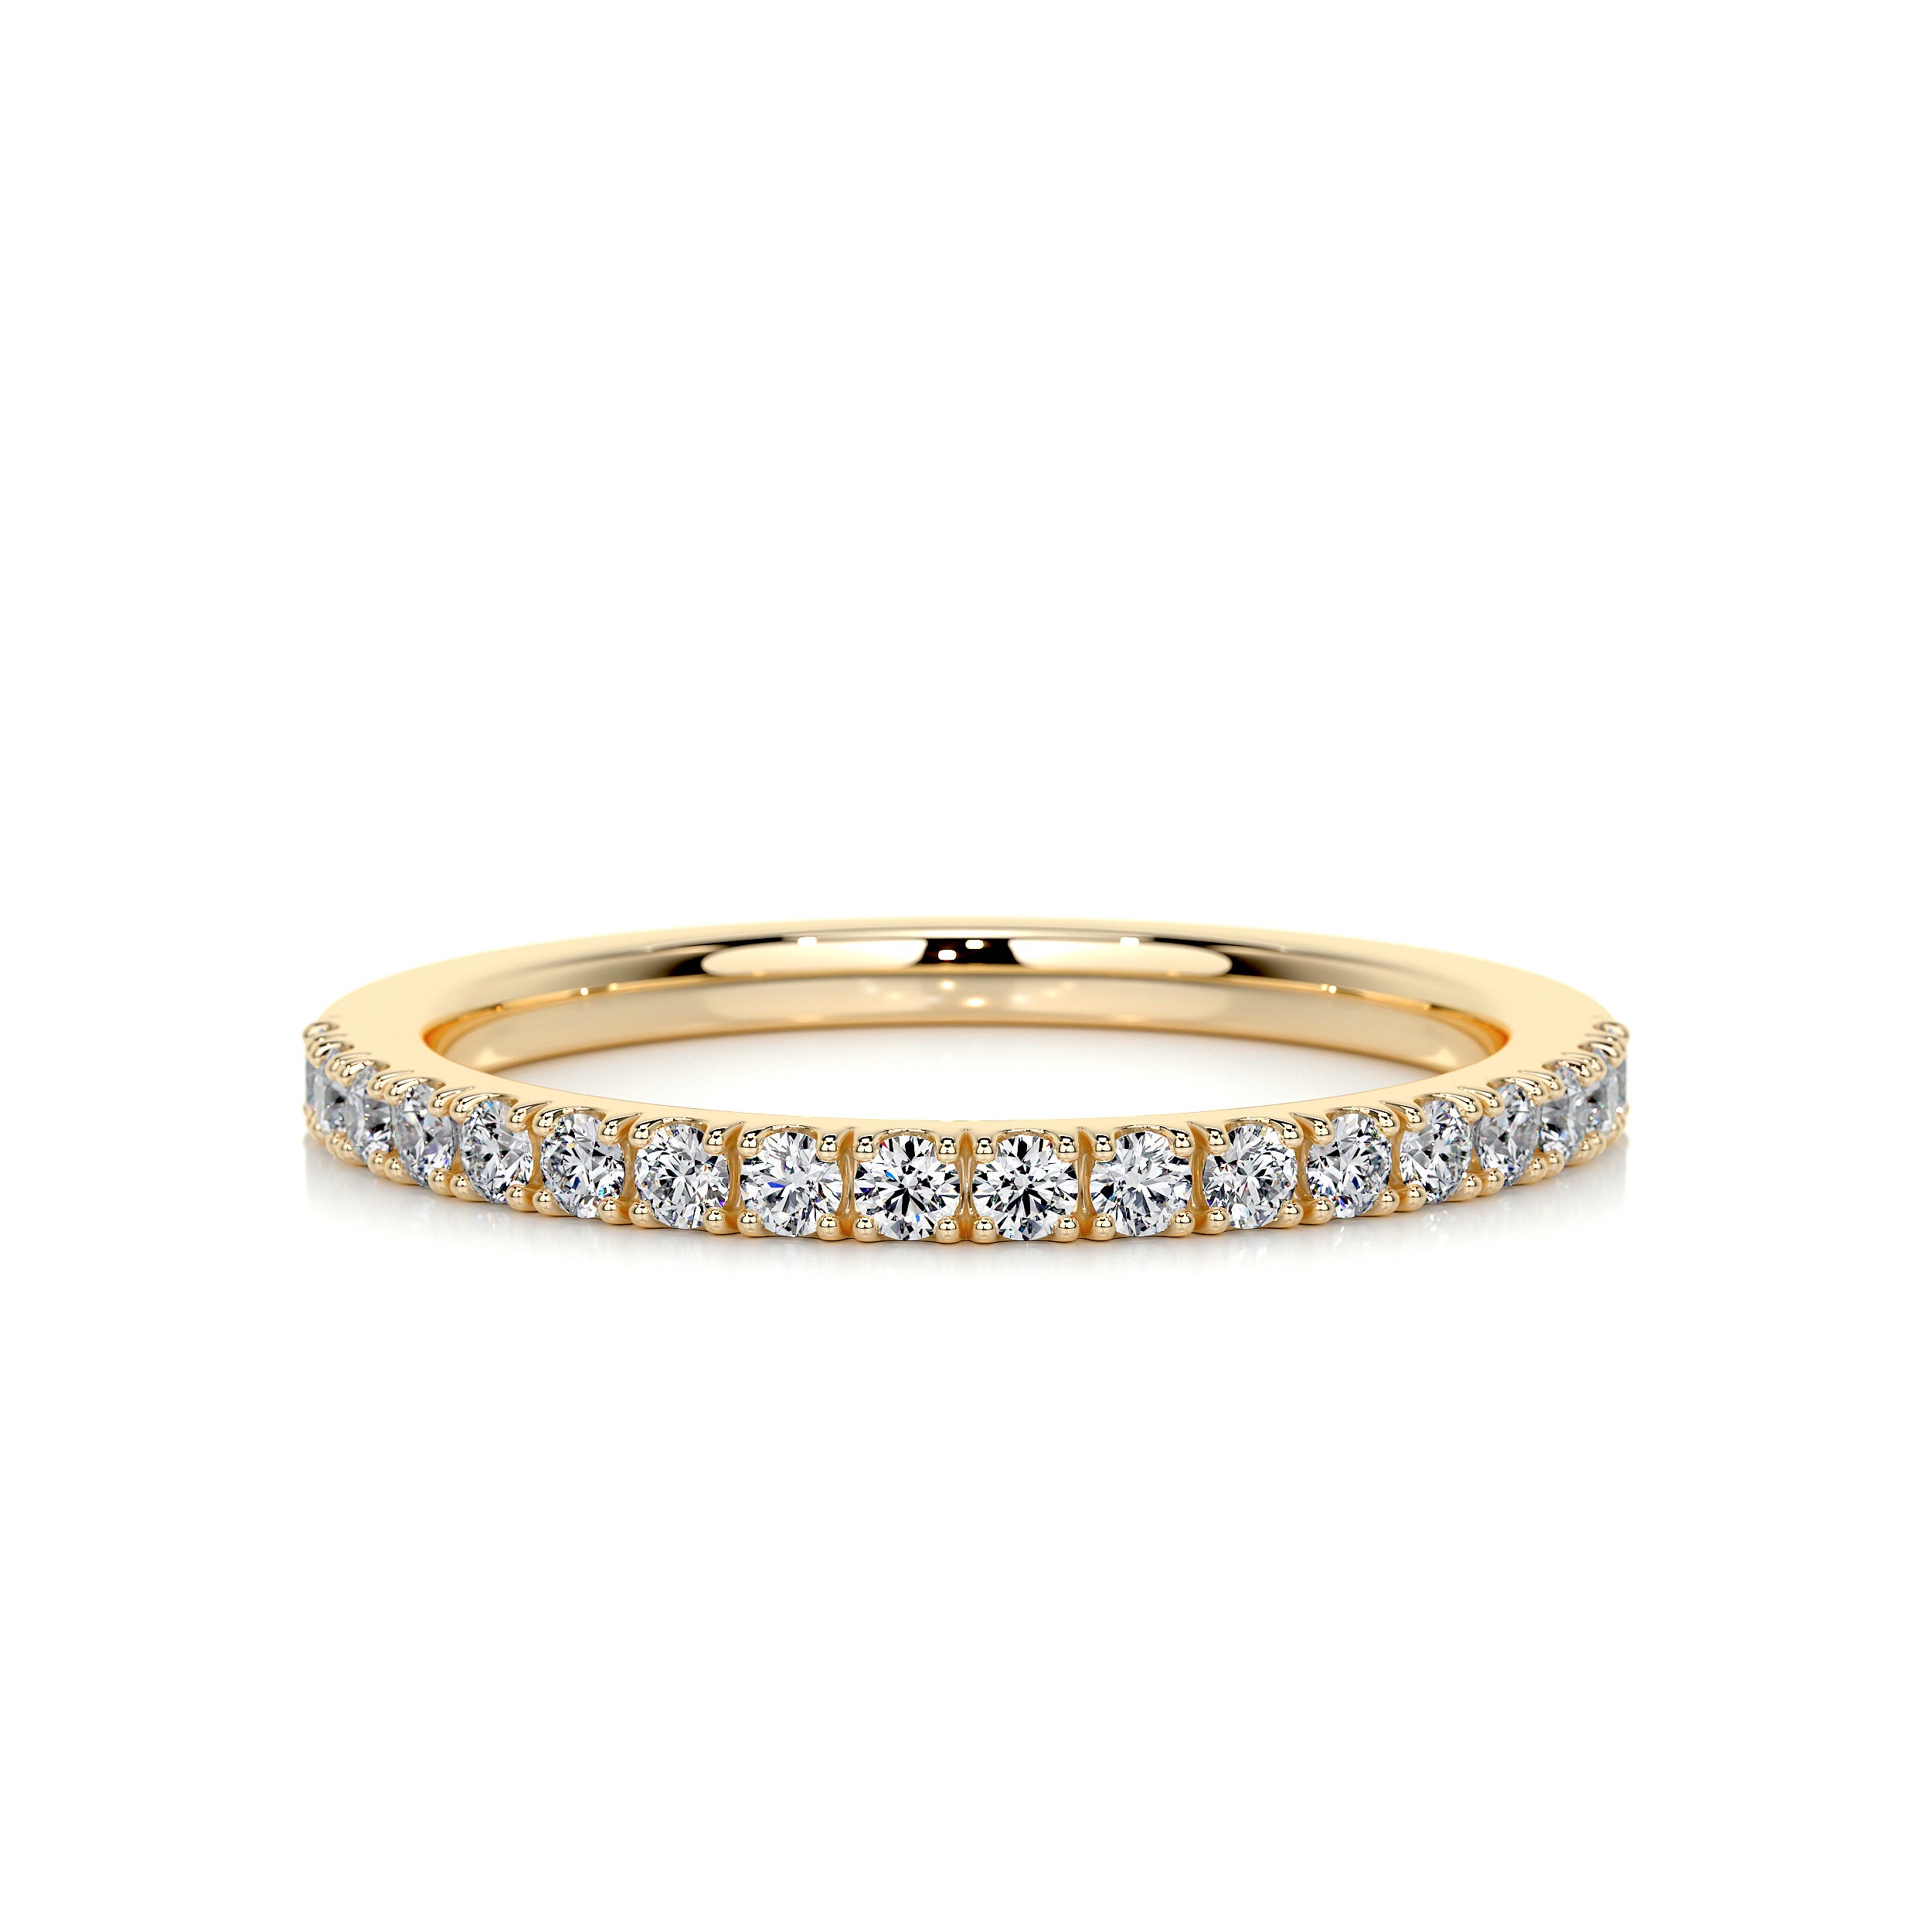 Stephanie Diamond Wedding Ring   (0.3 Carat) - 18K Yellow Gold